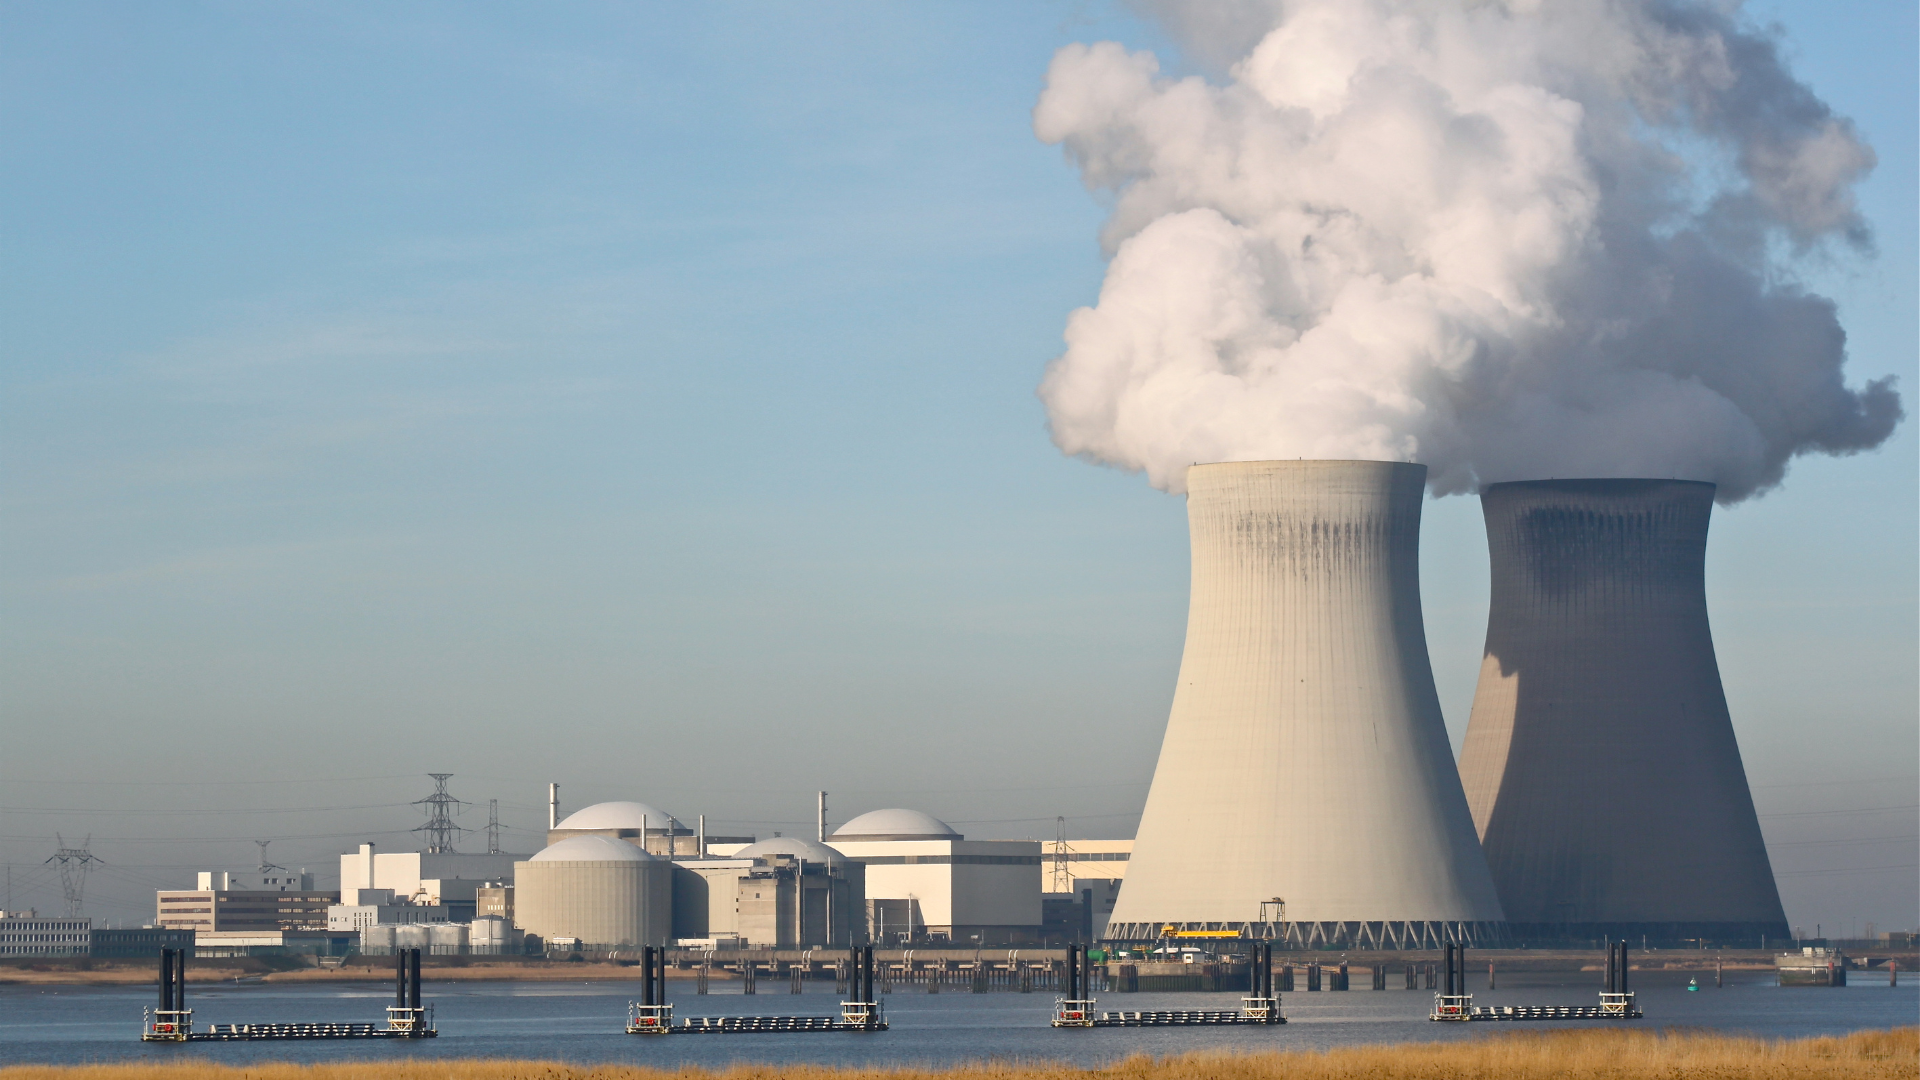 Jefe de energía nuclear de la ONU advierte, planta nuclear en Ucrania esta “fuera de control”